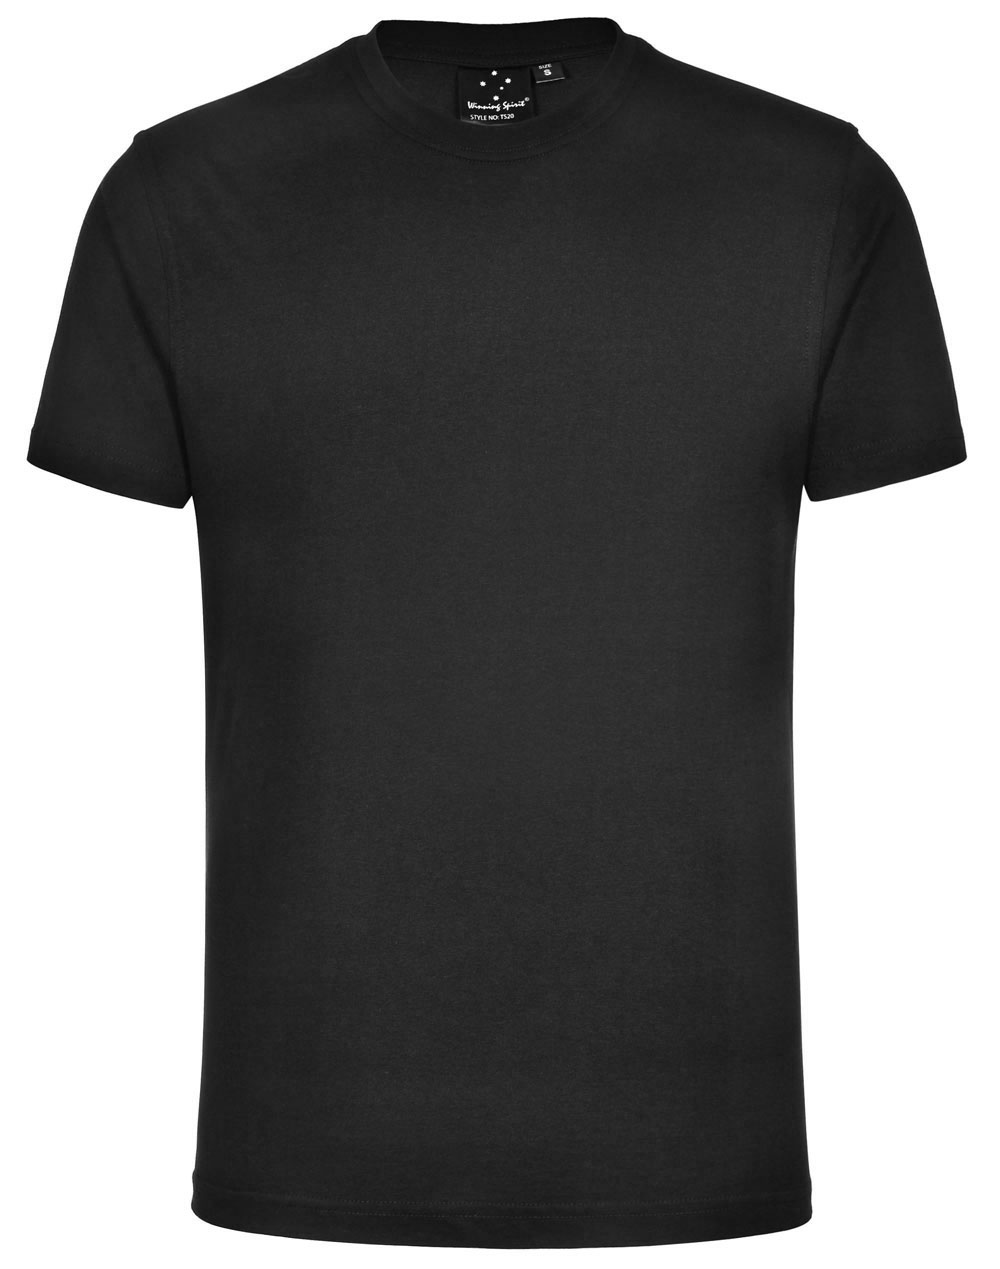 Custom Made (Black) Budget Unisex Crew Neck T-Shirts Mens Online Perth Australia